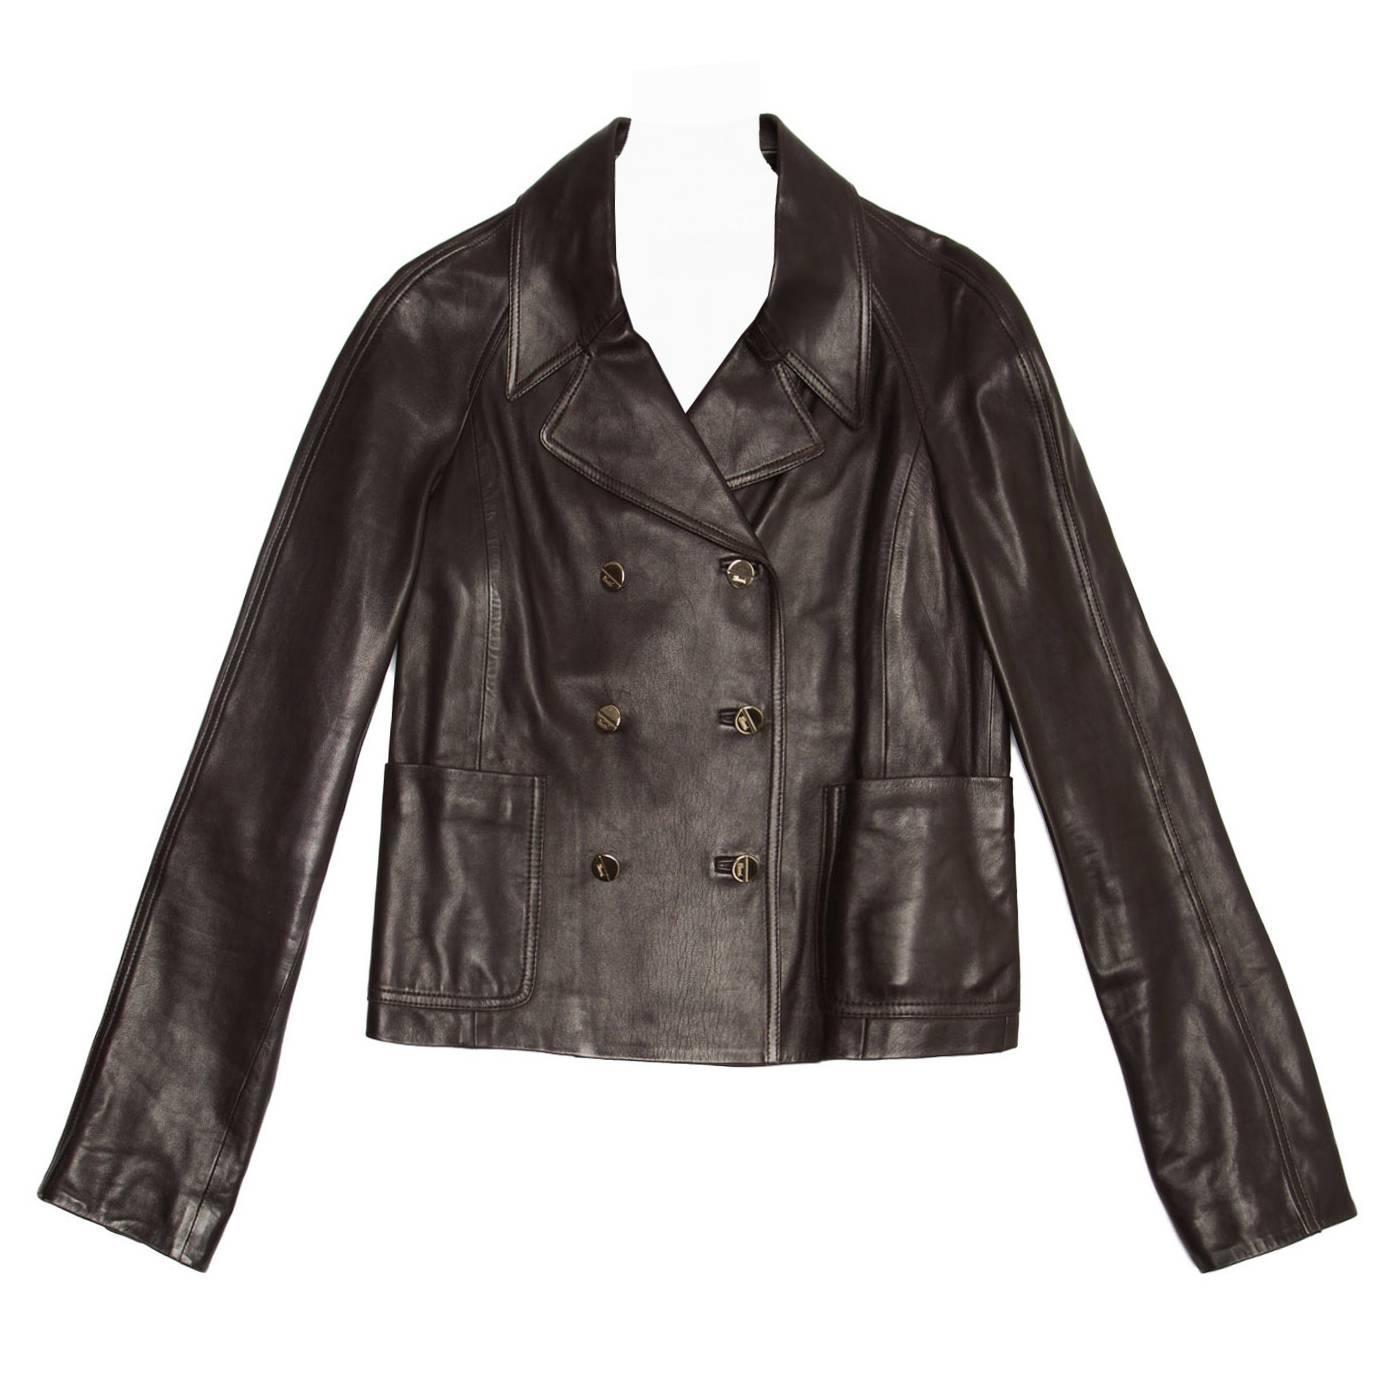 Gucci Dark Brown Leather Jacket at 1stdibs